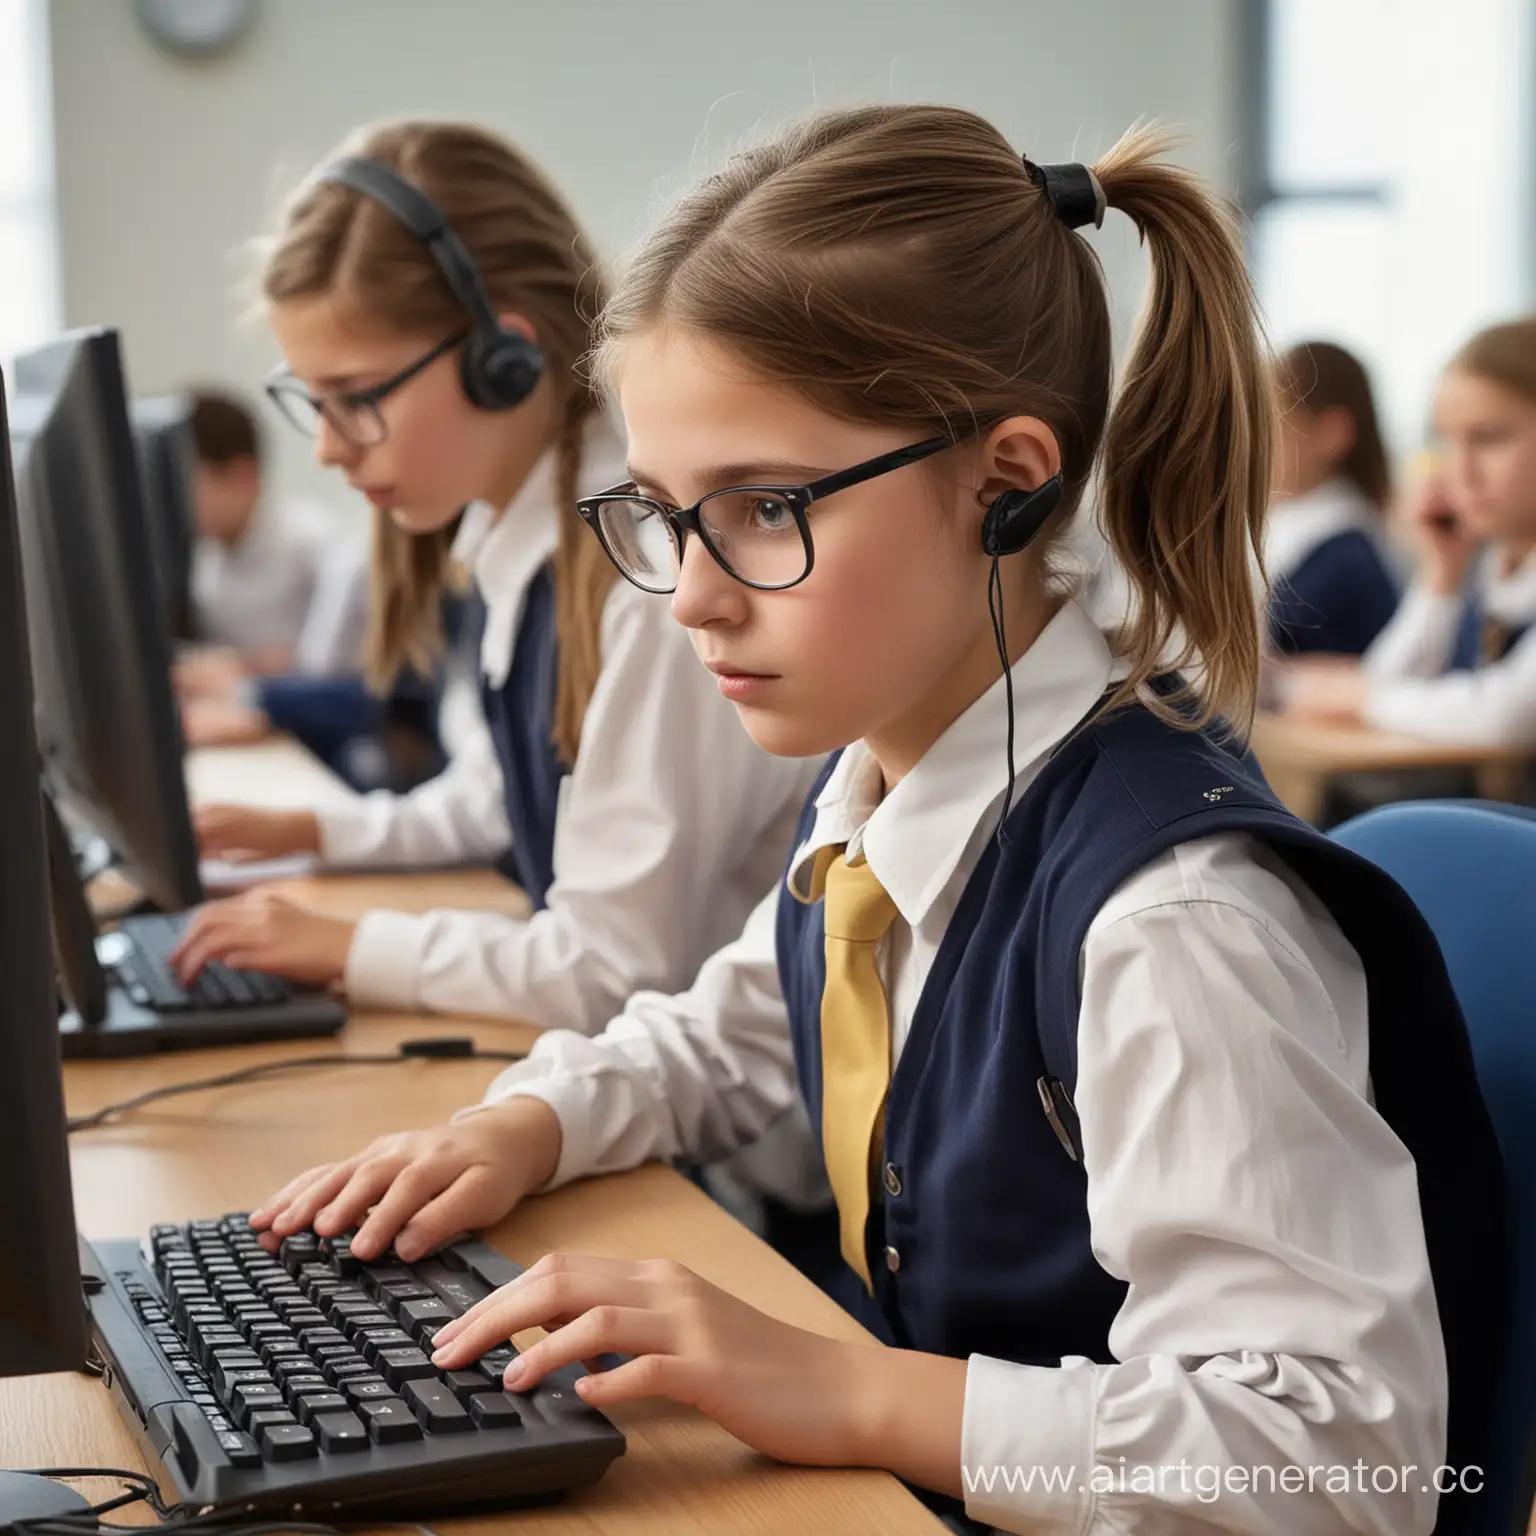 Schoolchildren-Engaged-in-Harmful-Computer-Activity